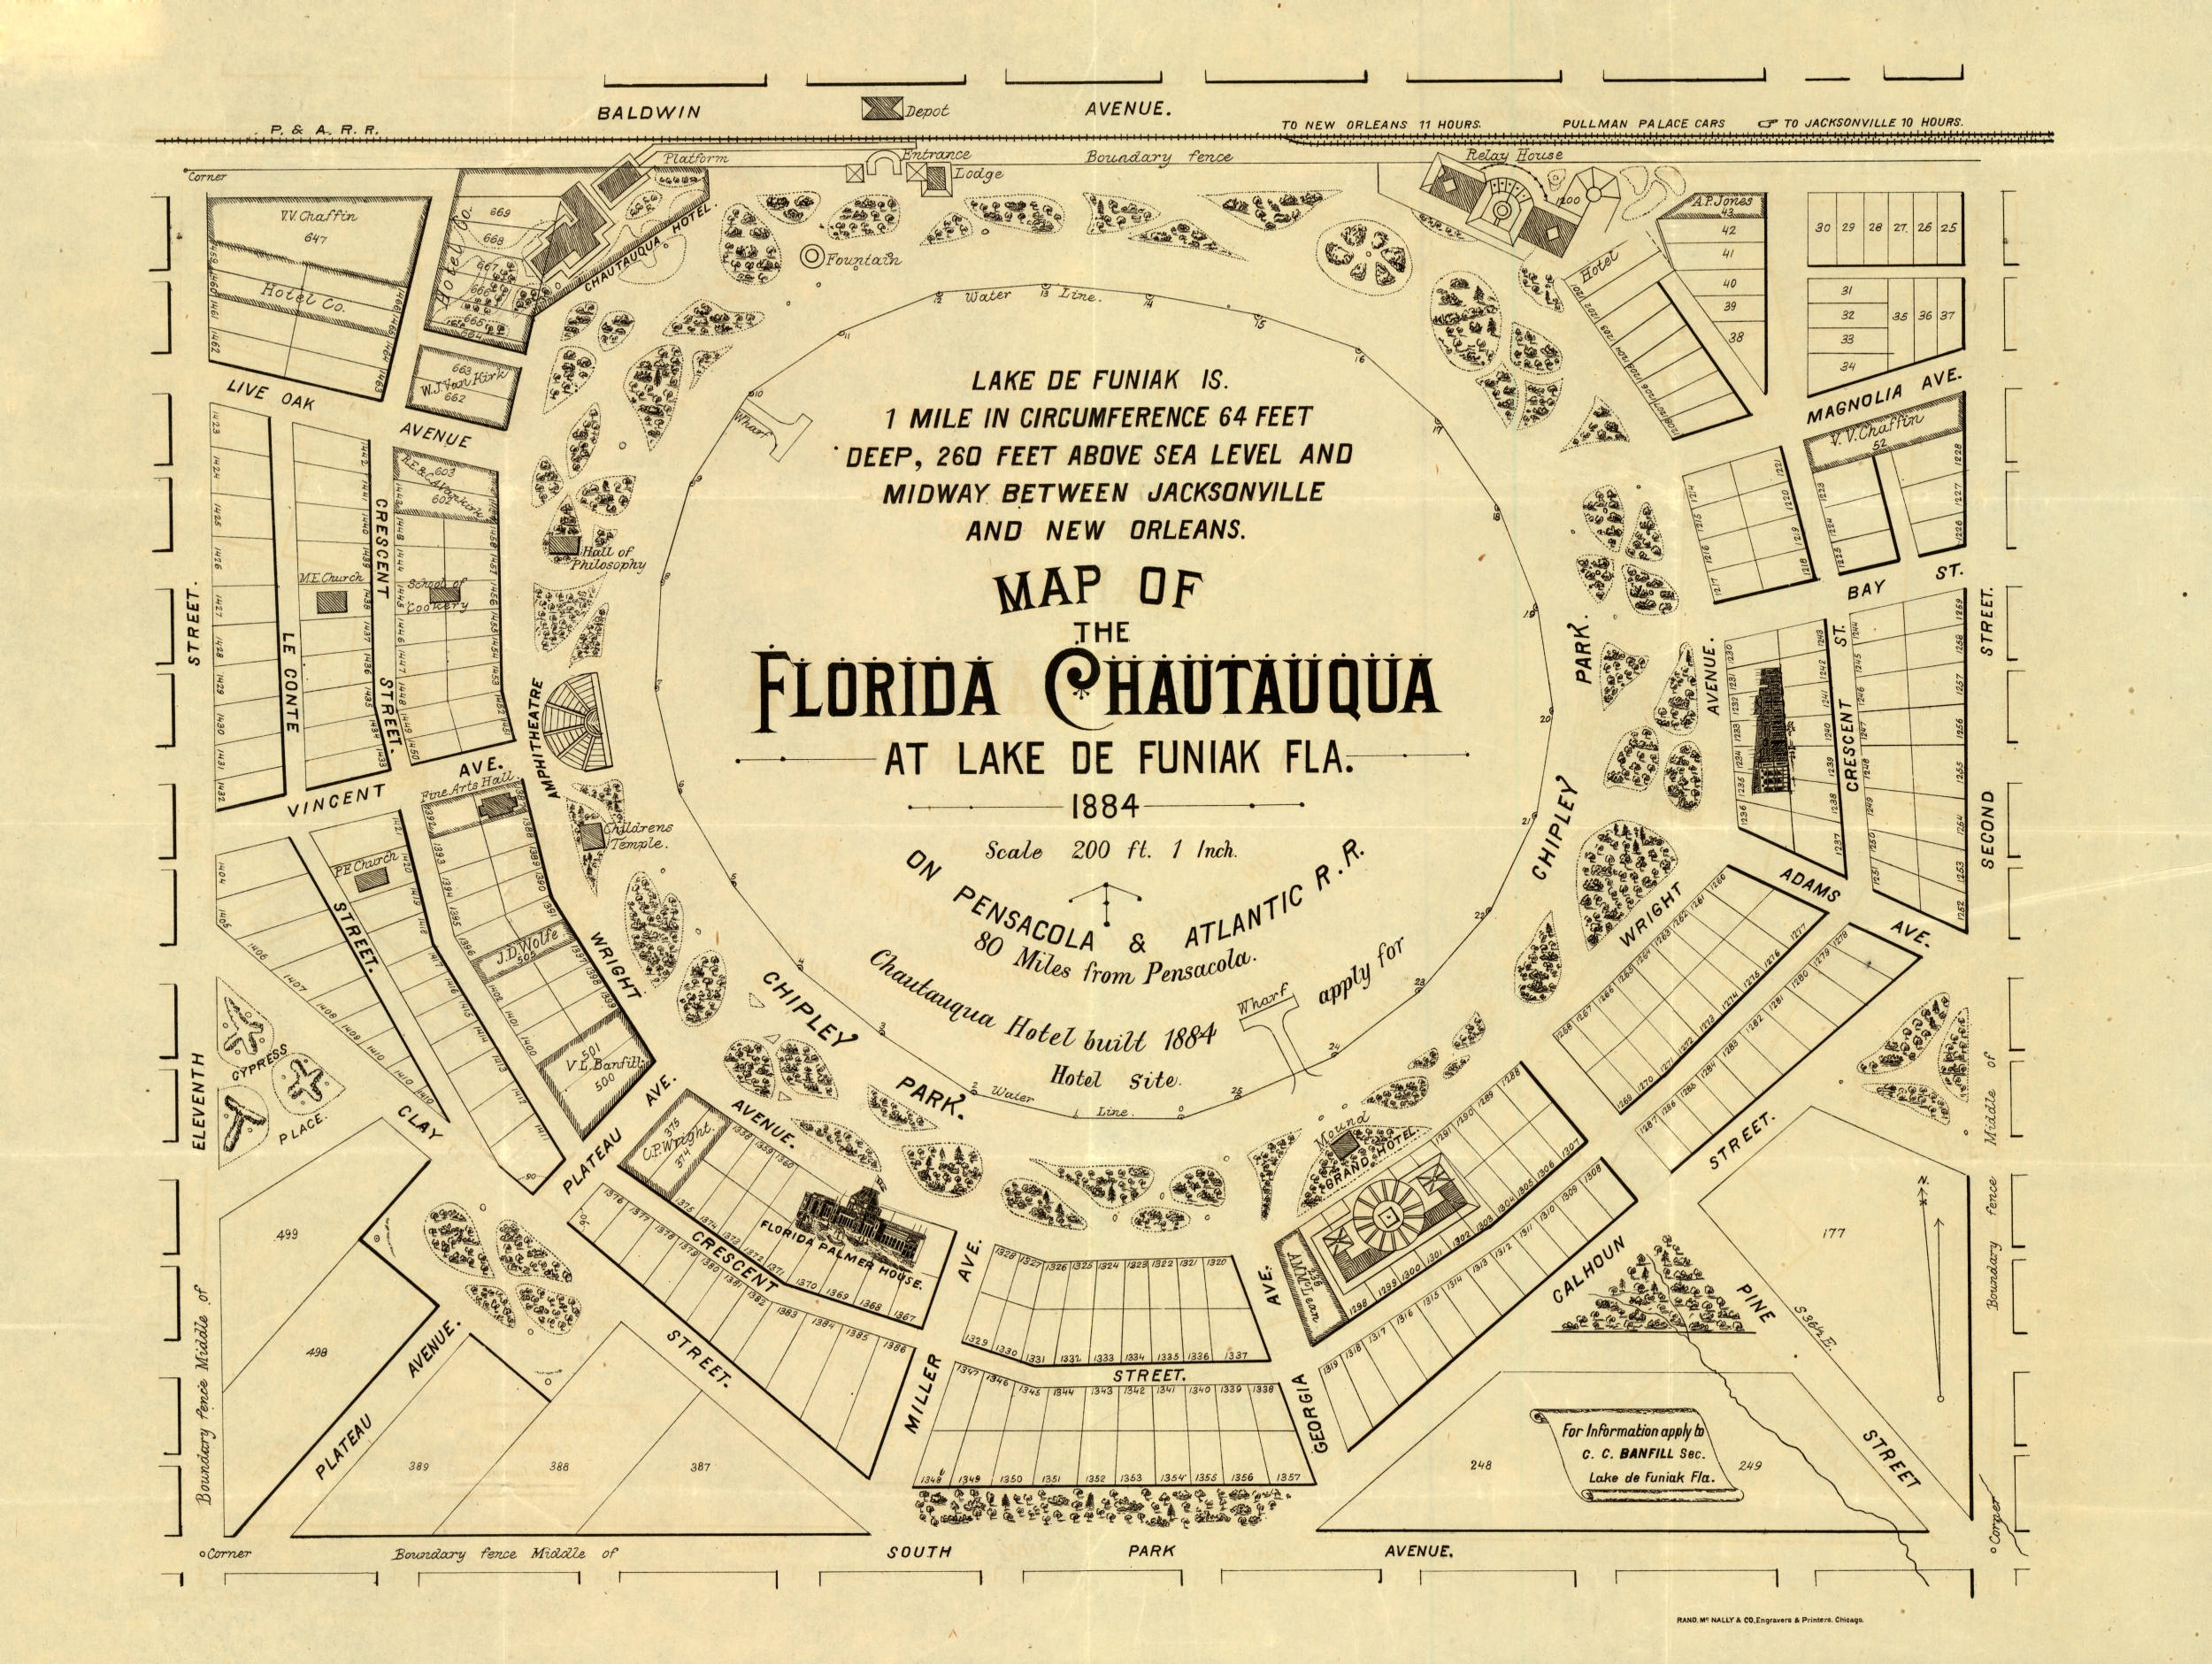 Map of the Florida Chautauqua at Lake DeFuniak, 1884